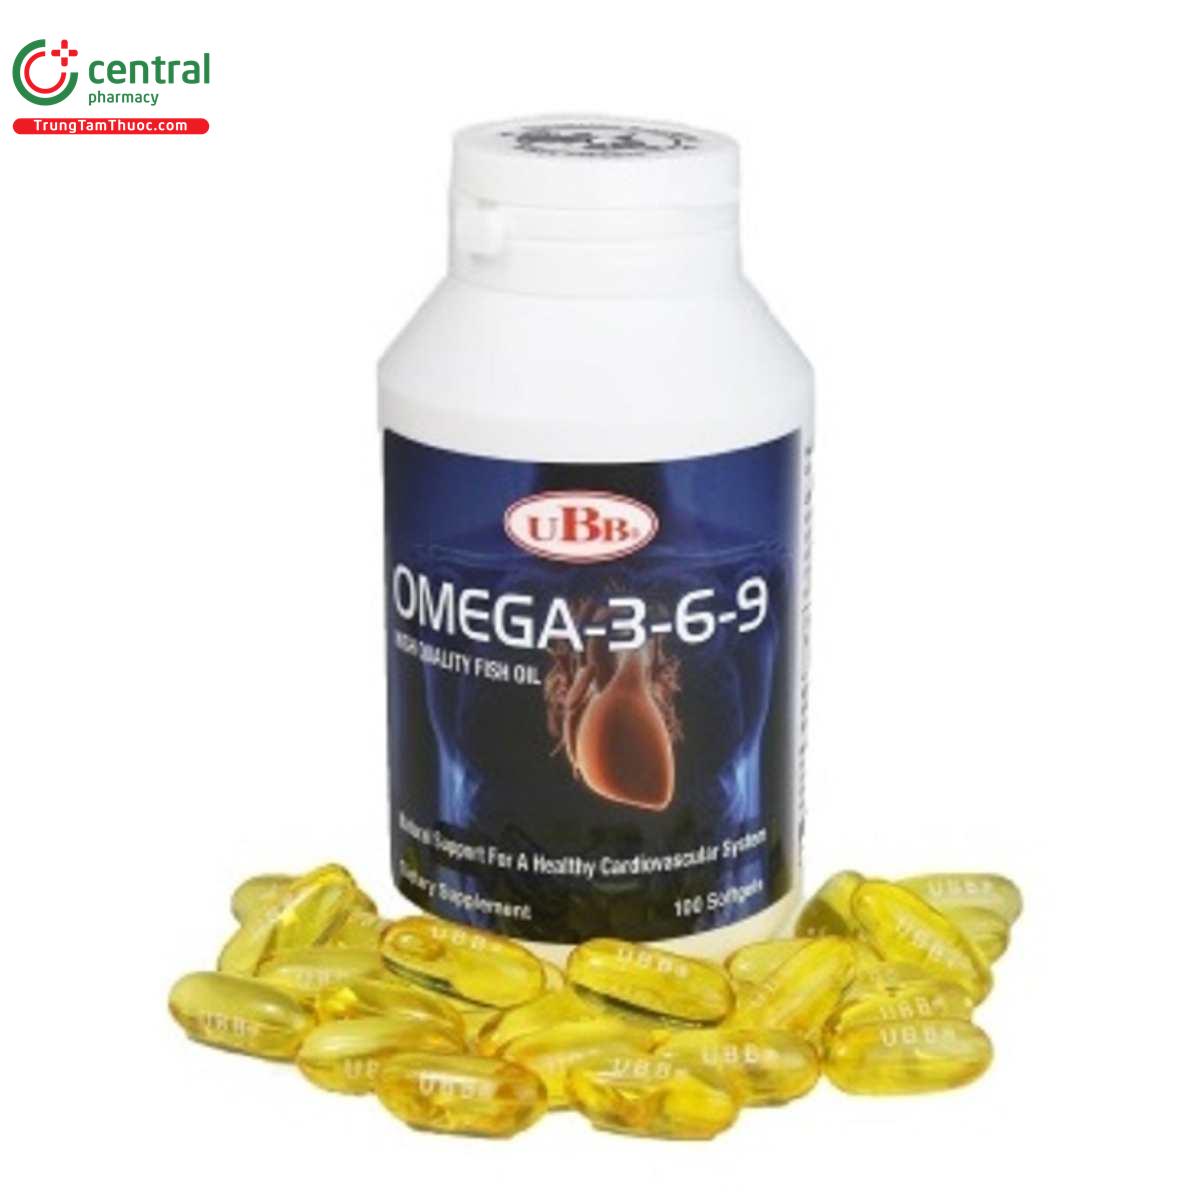 ubb omega369 11 I3736